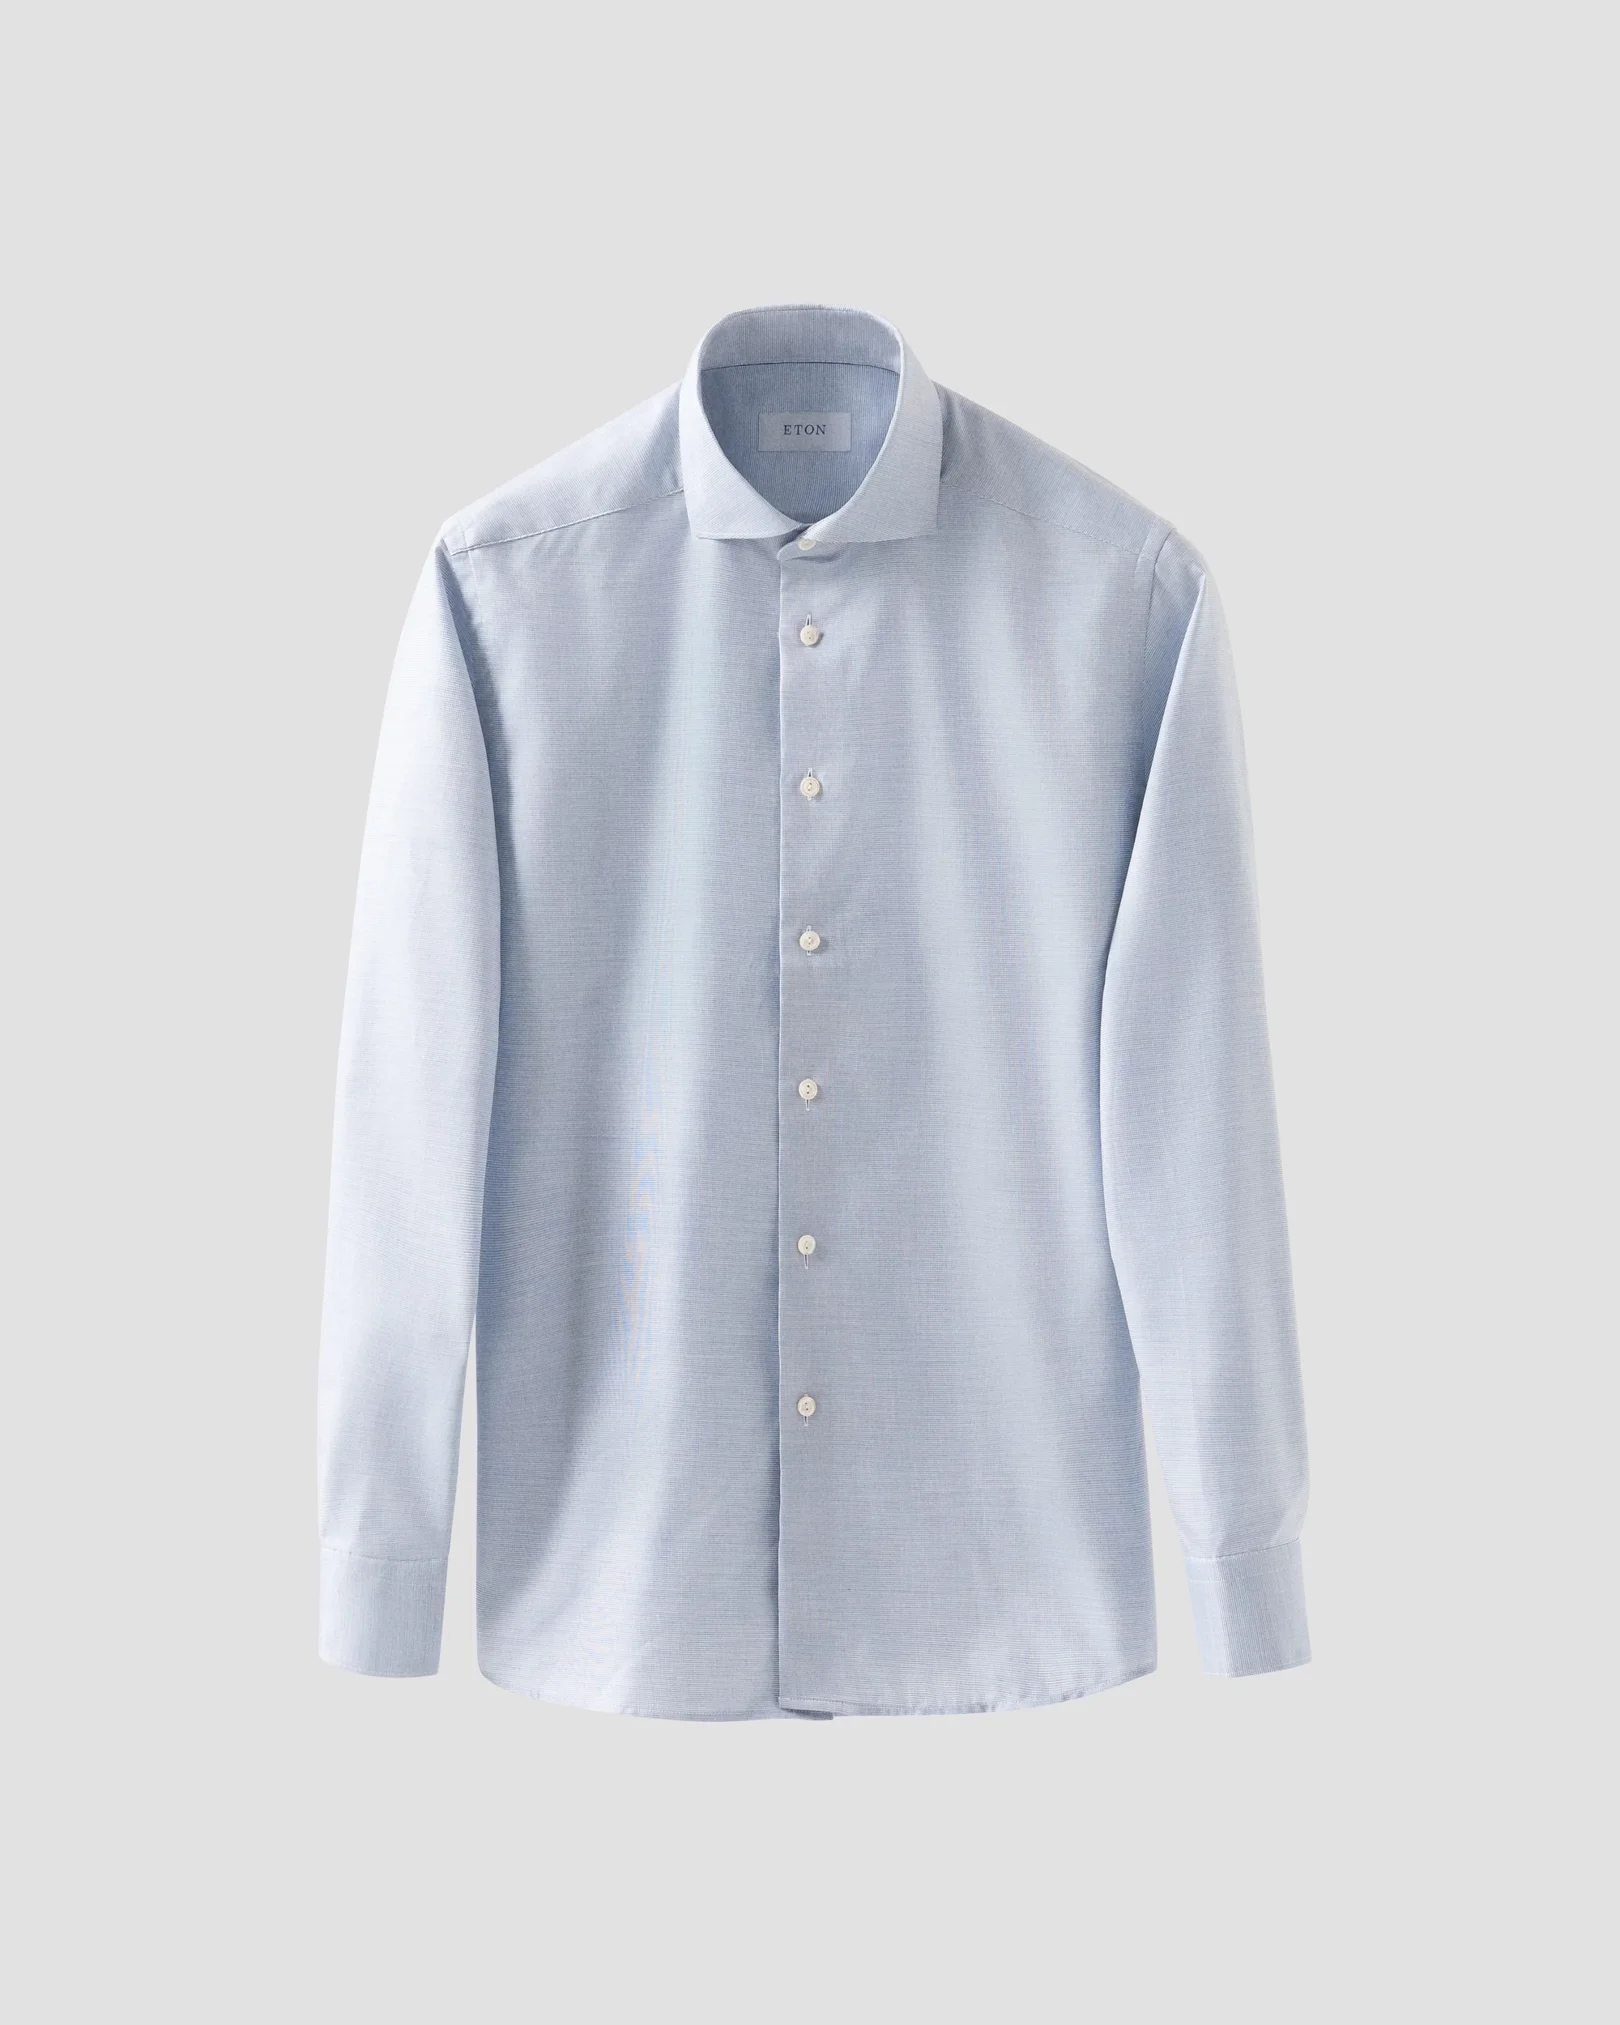 Eton - light blue twill organic cotton